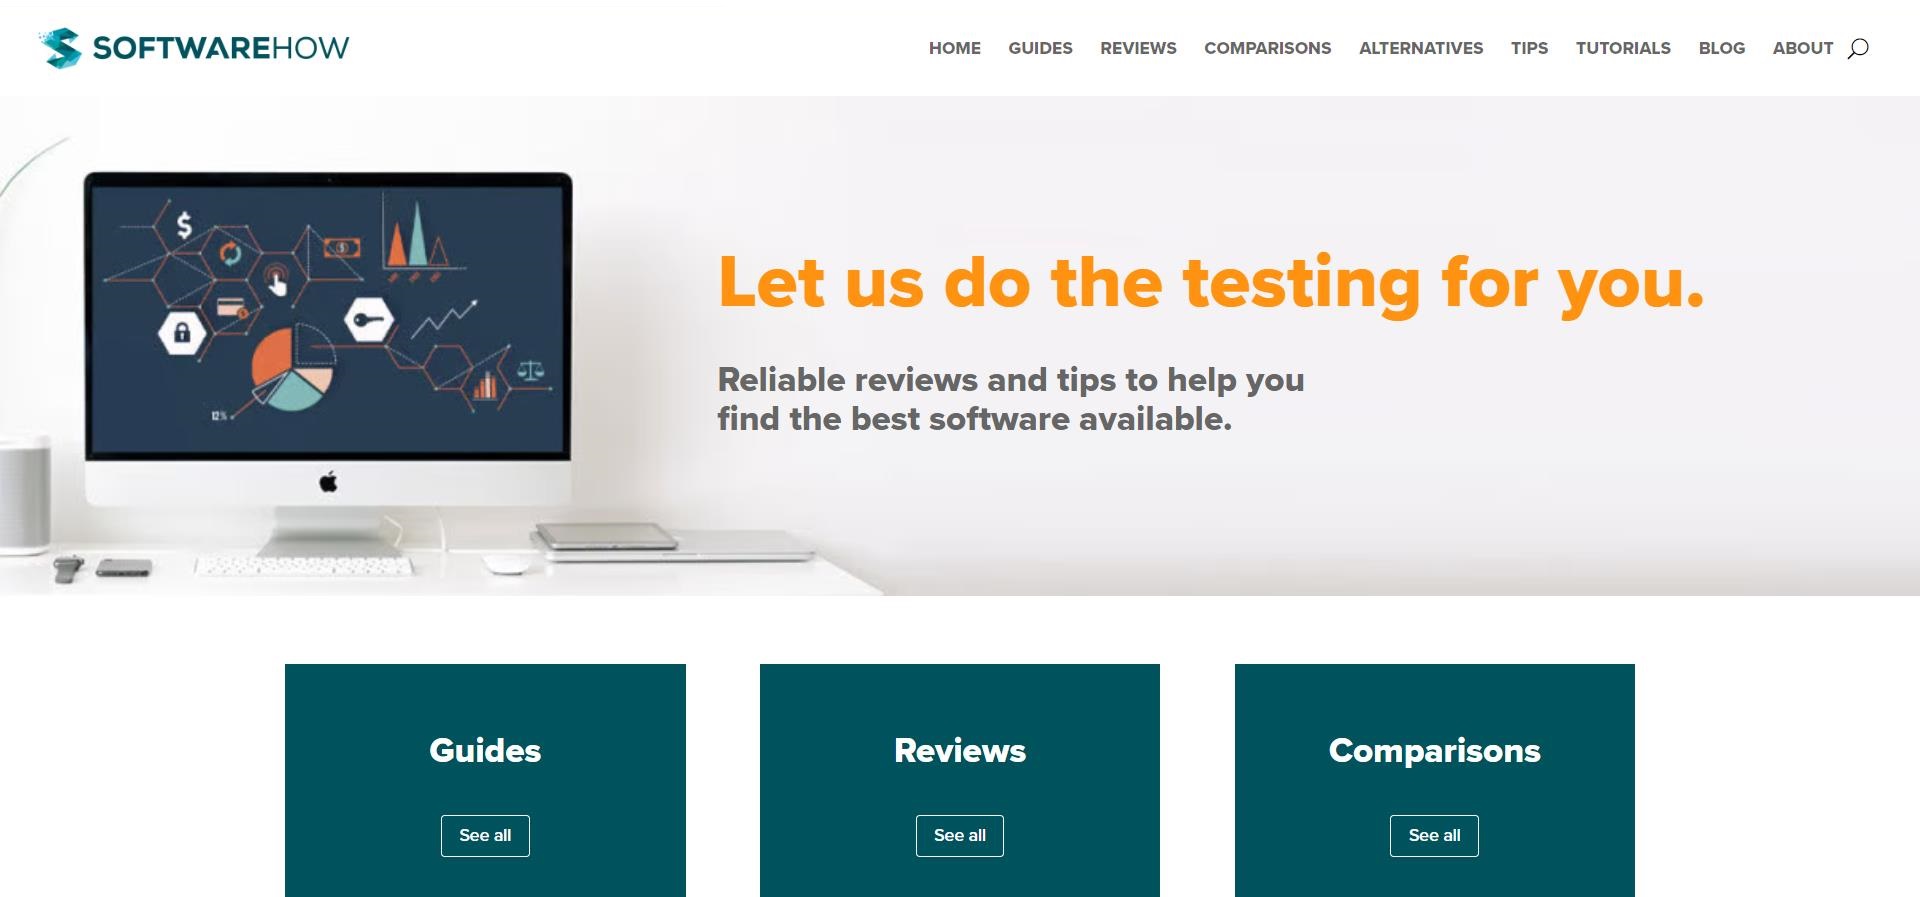 softwarehow homepage